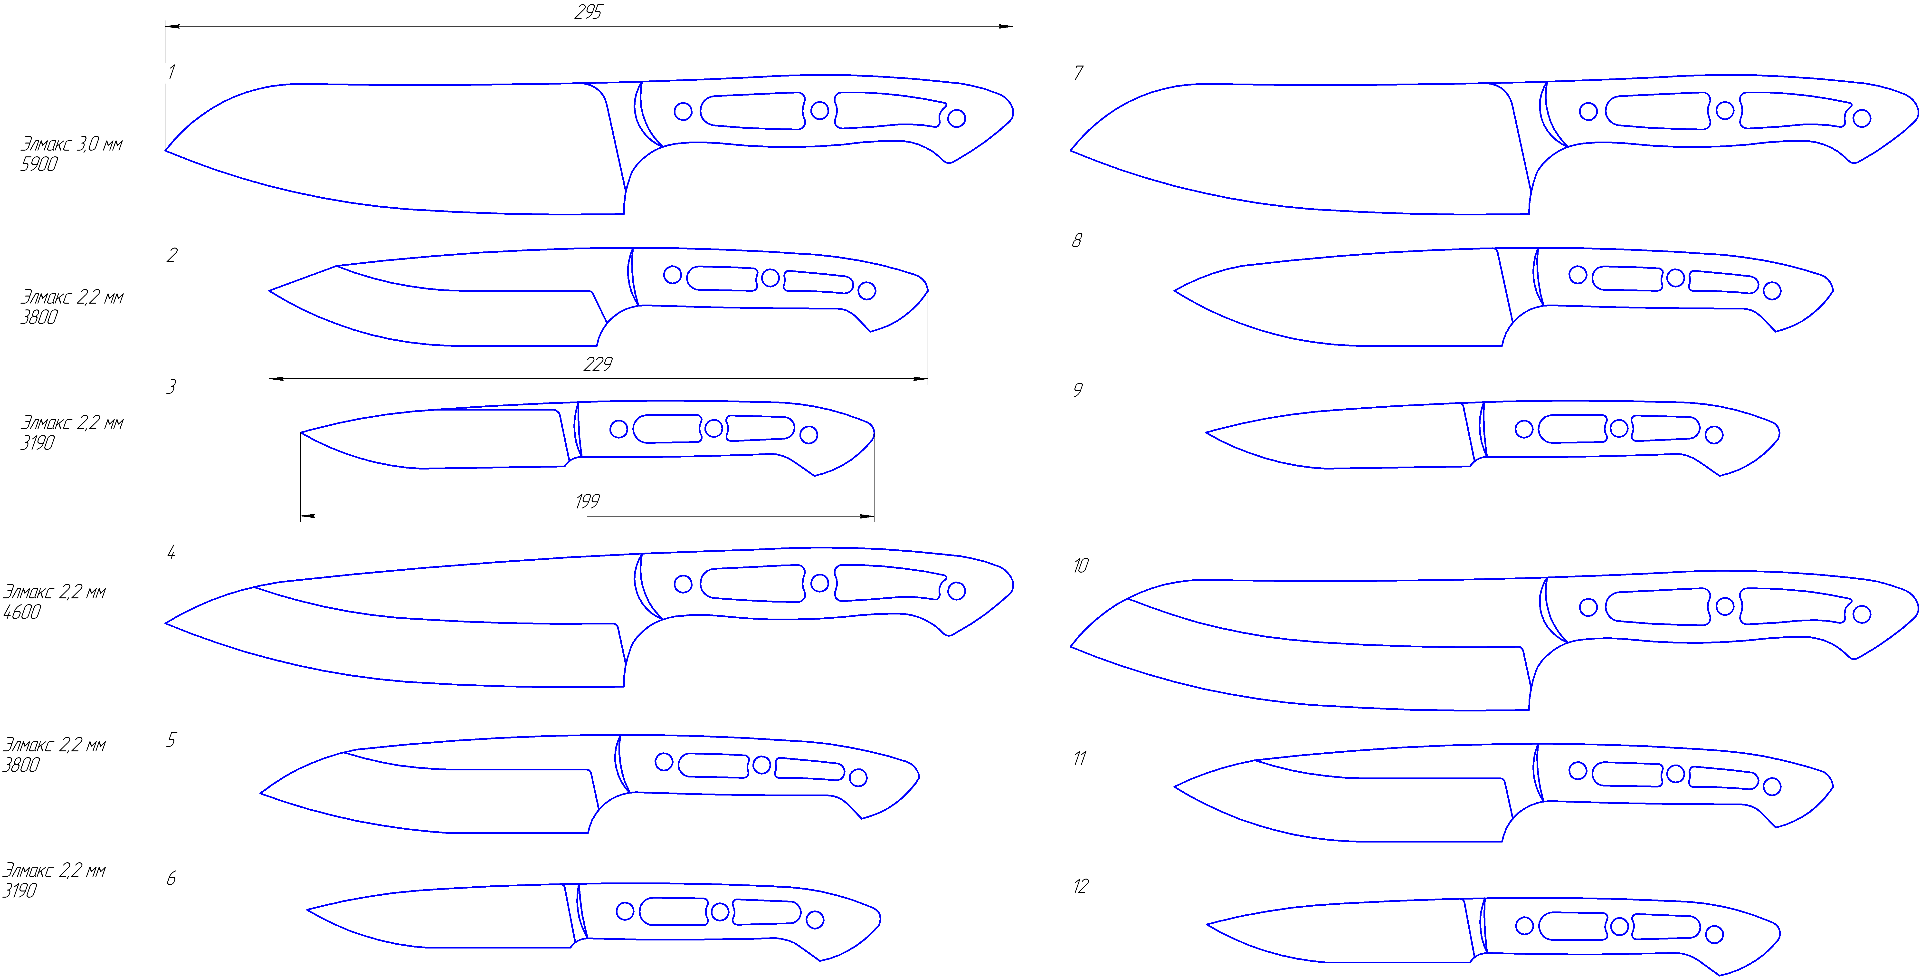 Форма кухонных ножей чертежи фото